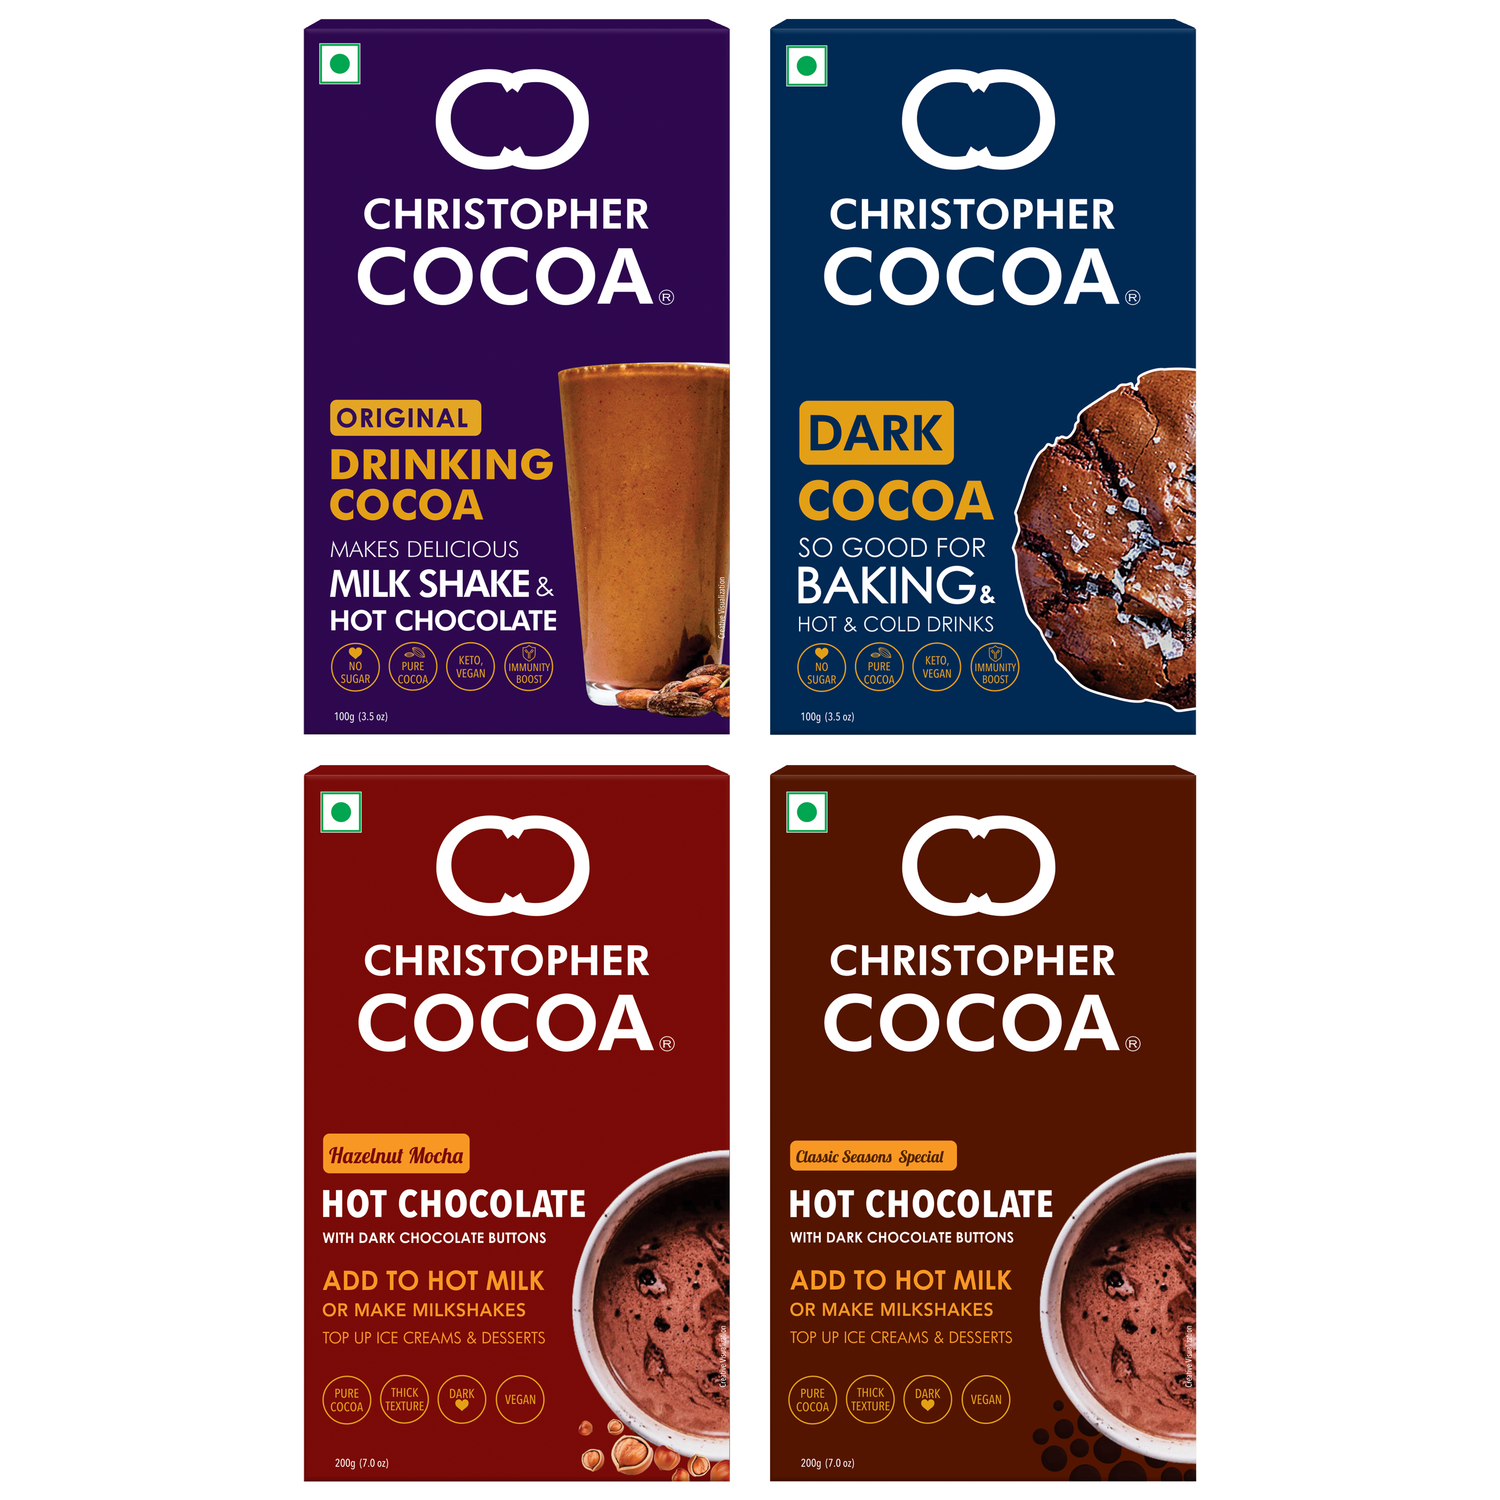 Drinking Cocoa 100g, Dark Cocoa 100g, Hot Chocolate with Dark Chocolate Buttons 200g, Hazelnut Mocha Hot Chocolate with Dark Chocolate Buttons 200g 